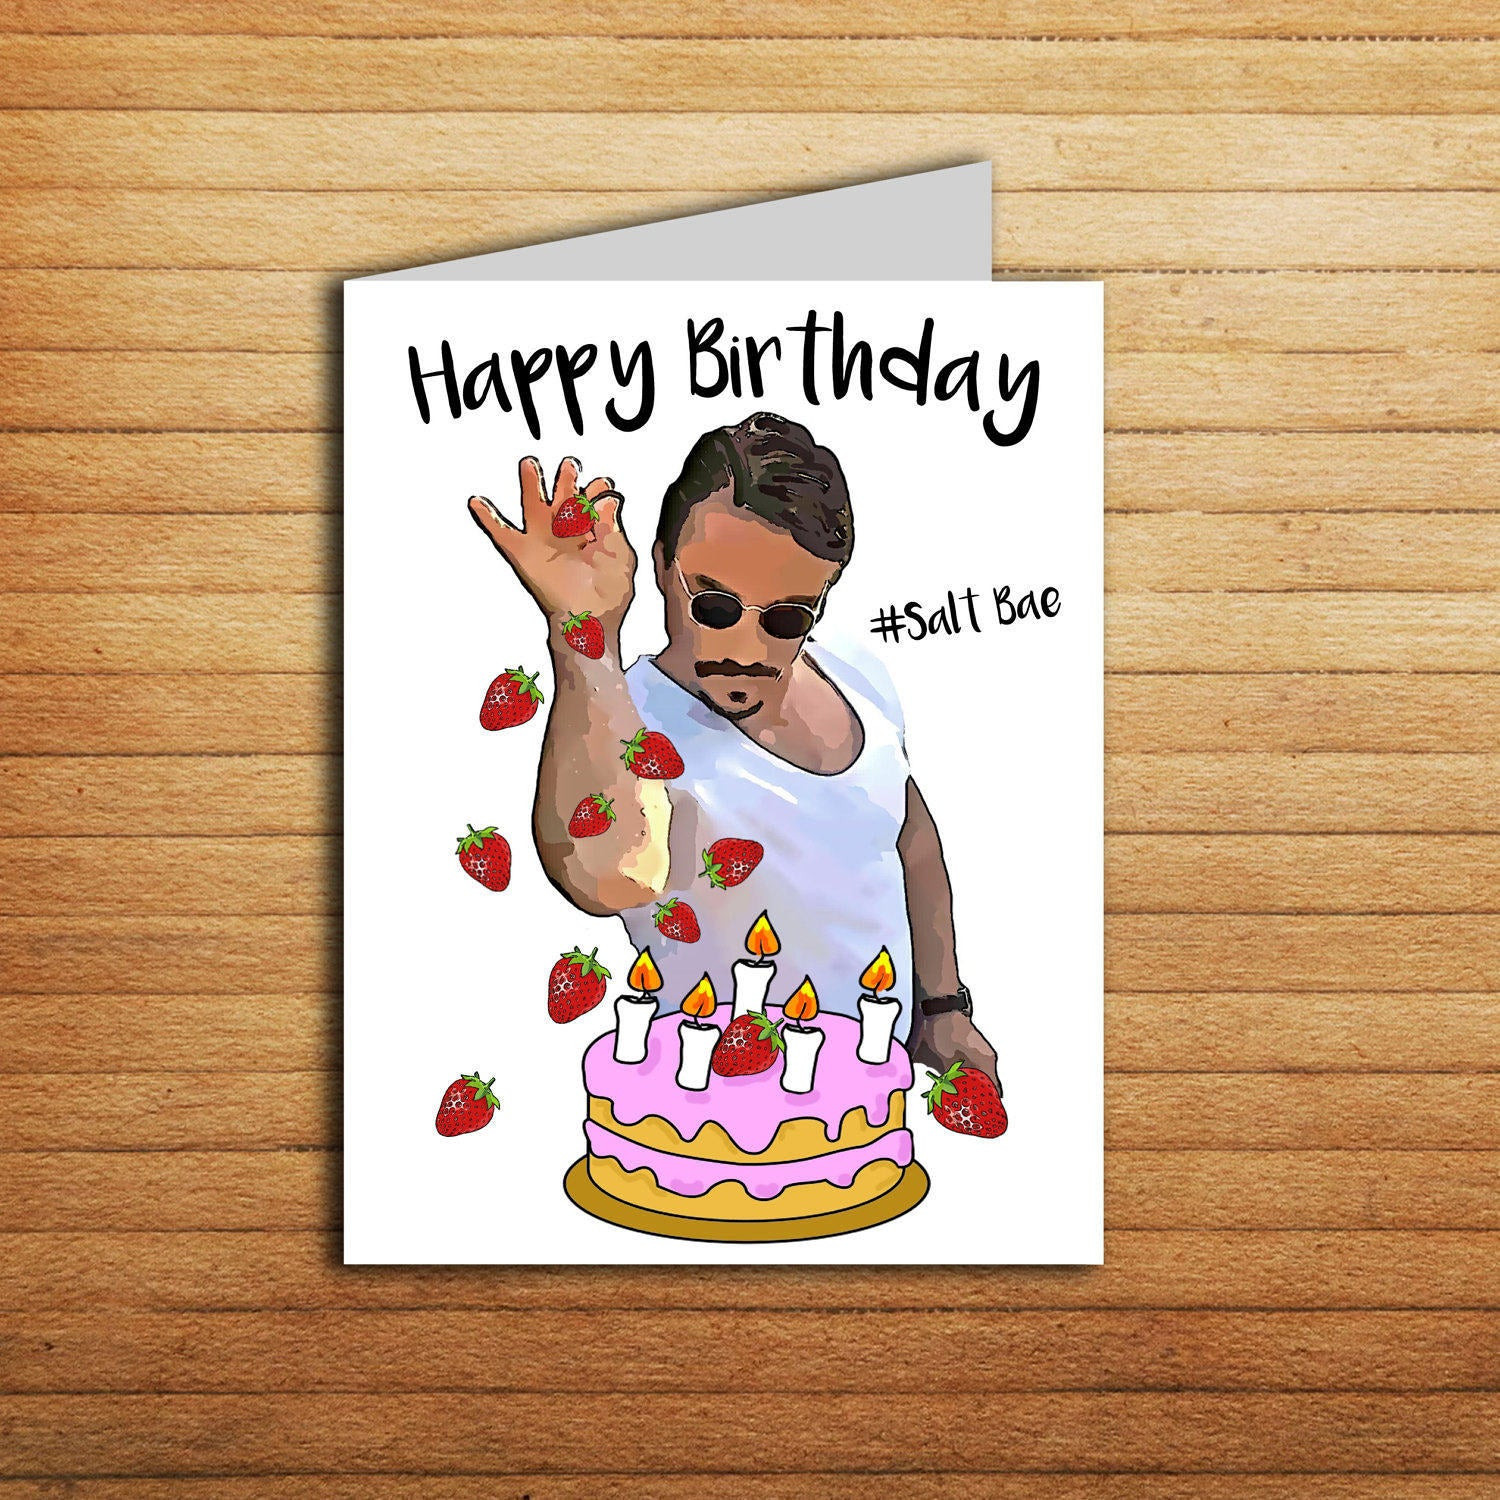 Funny Birthday Cards To Print
 Salt Bae Birthday Card Printable Funny Birthday Card for